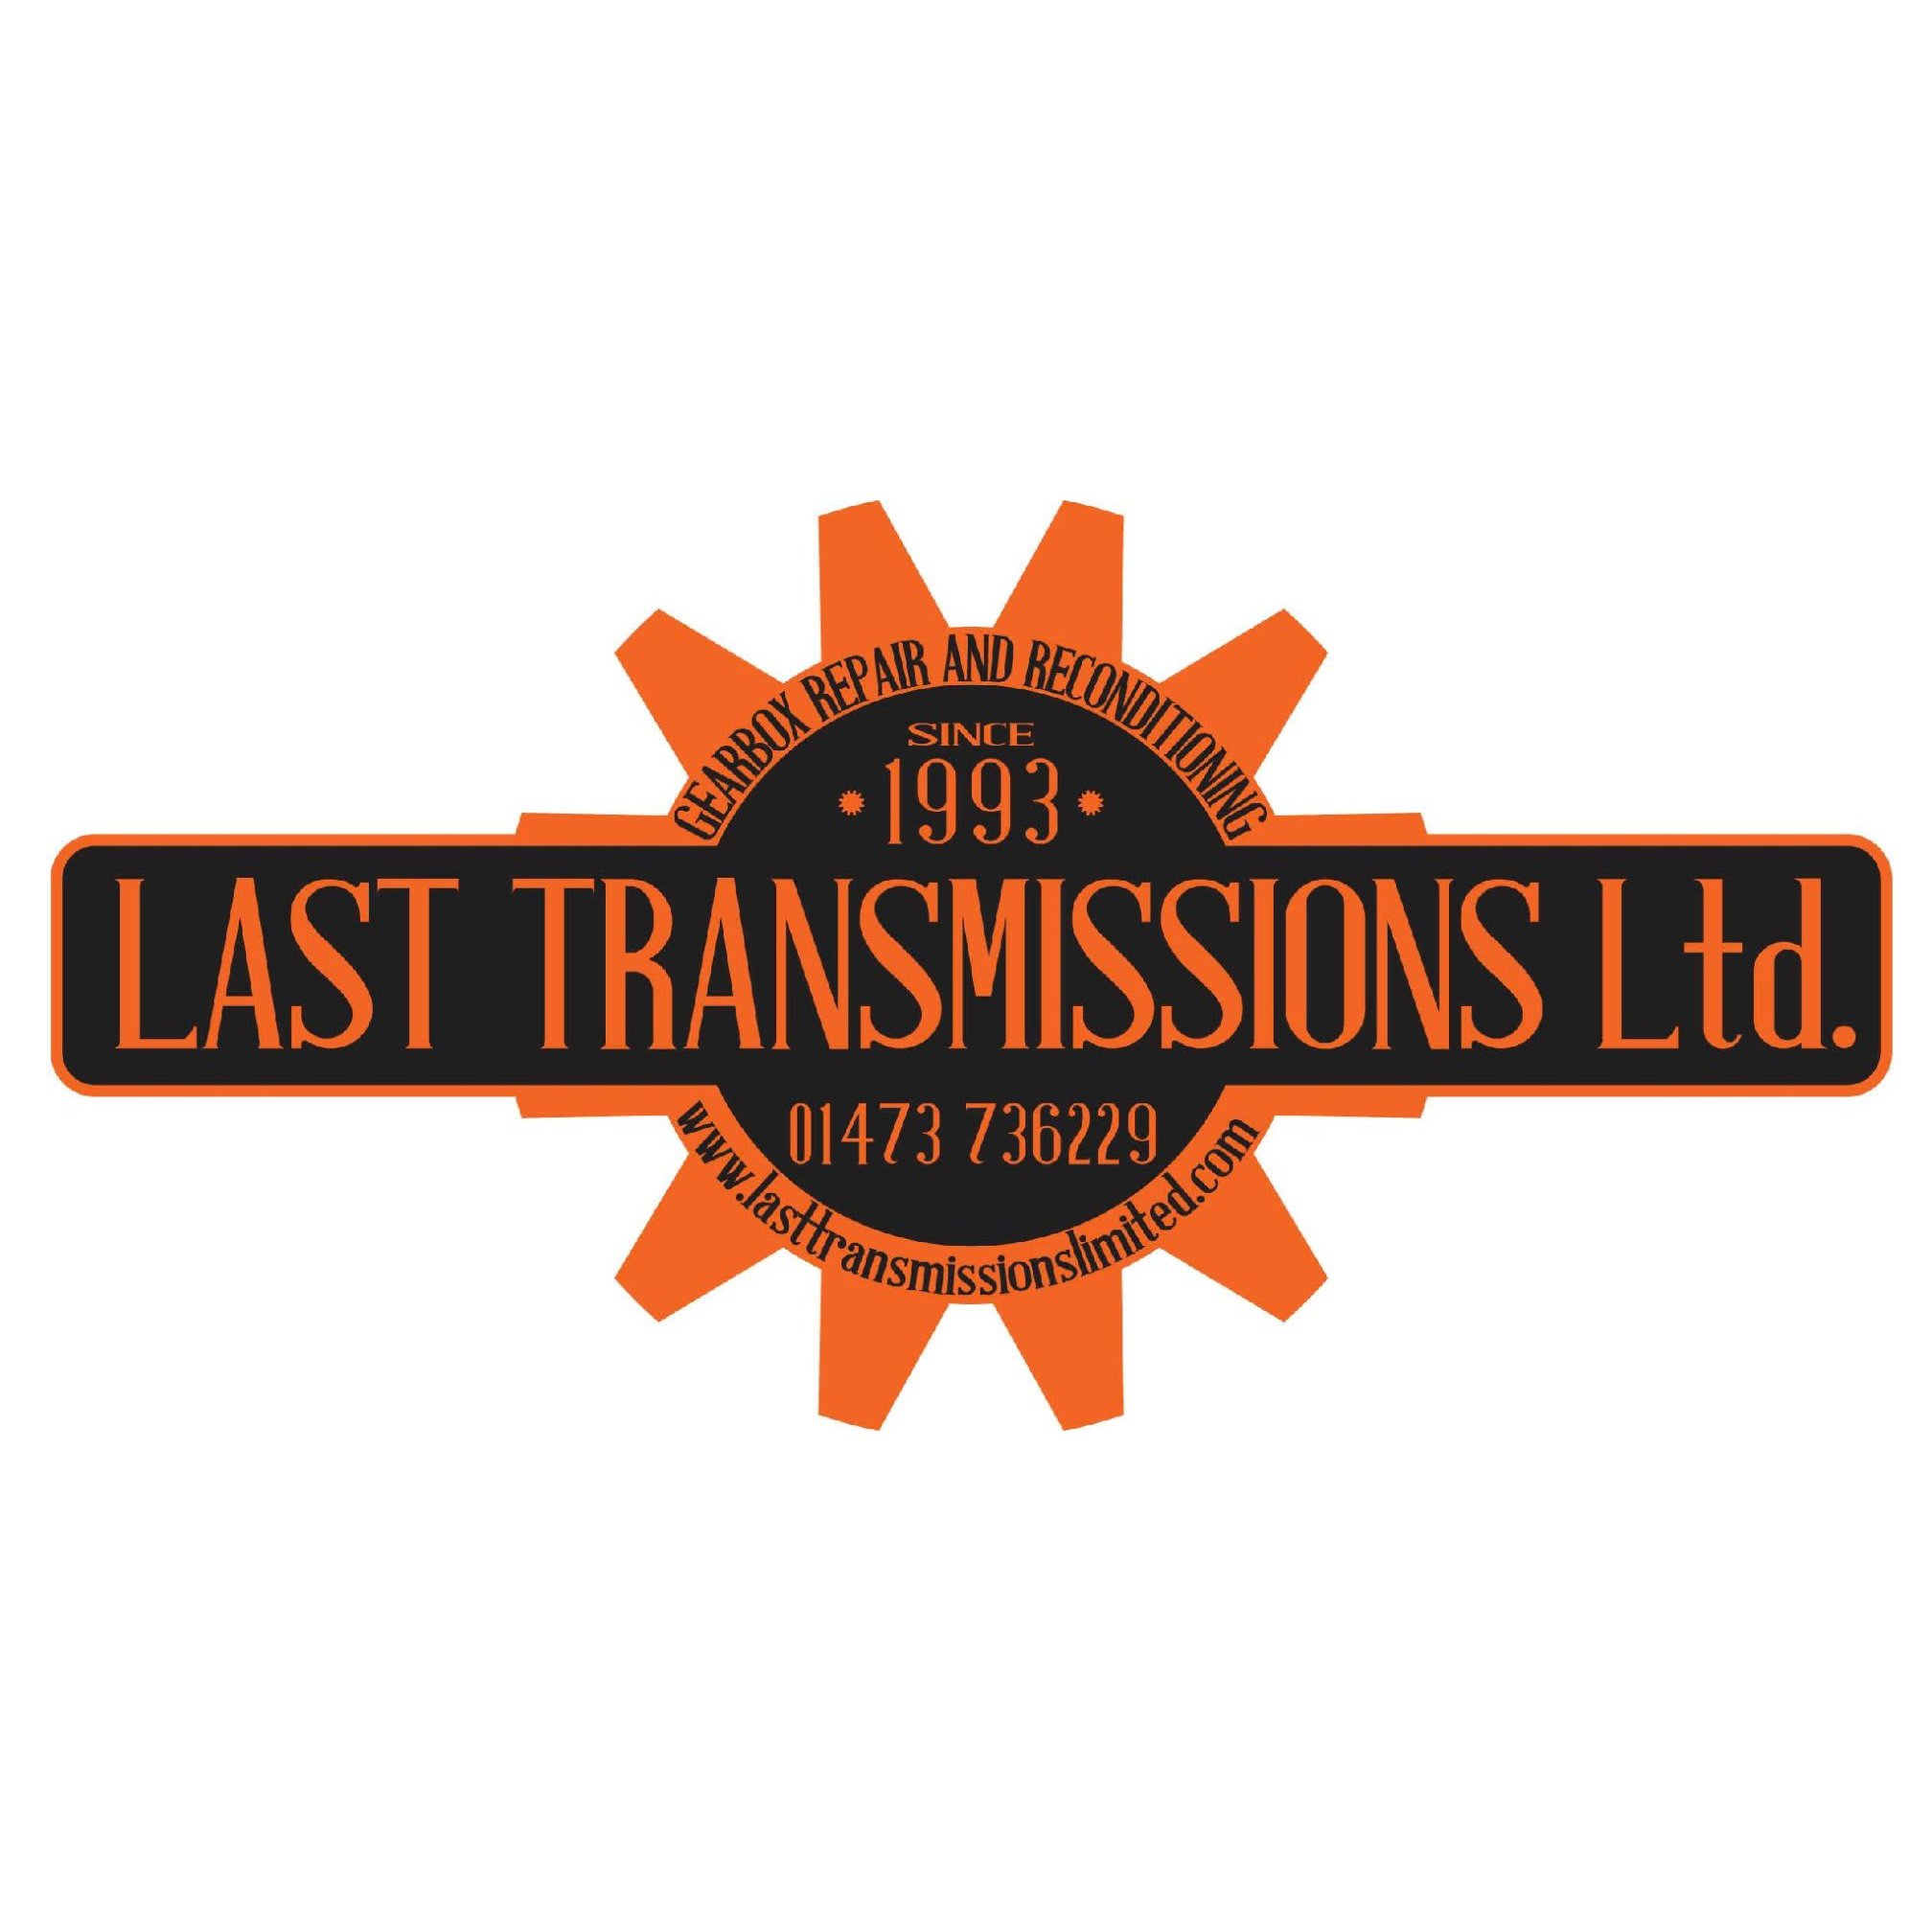 LOGO Last Transmissions Ltd Woodbridge 01473 736229